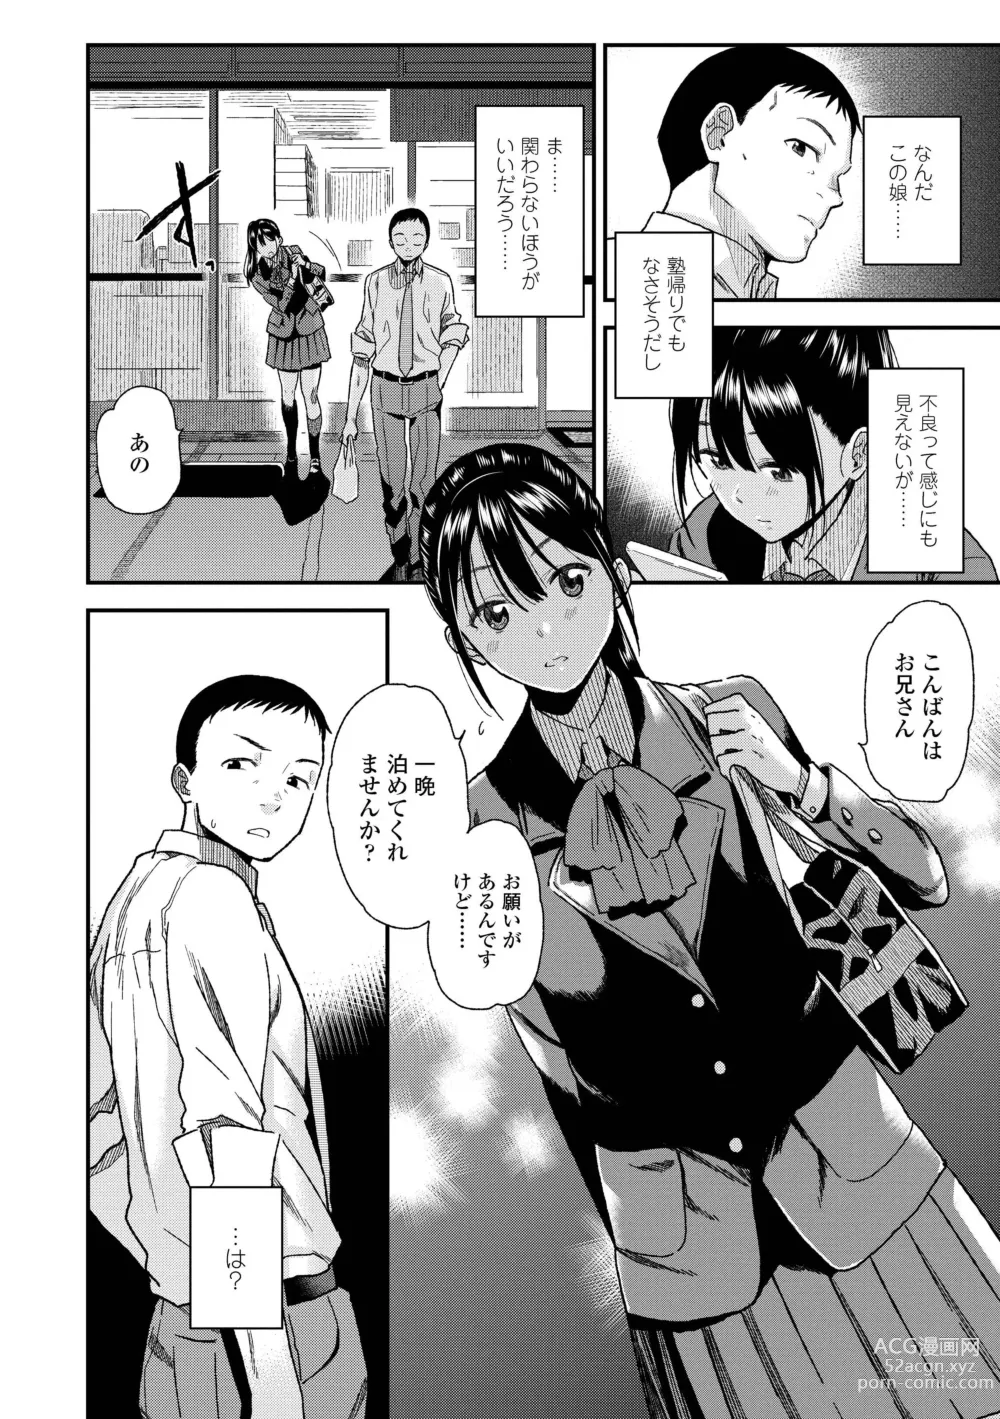 Page 6 of manga BorderLine